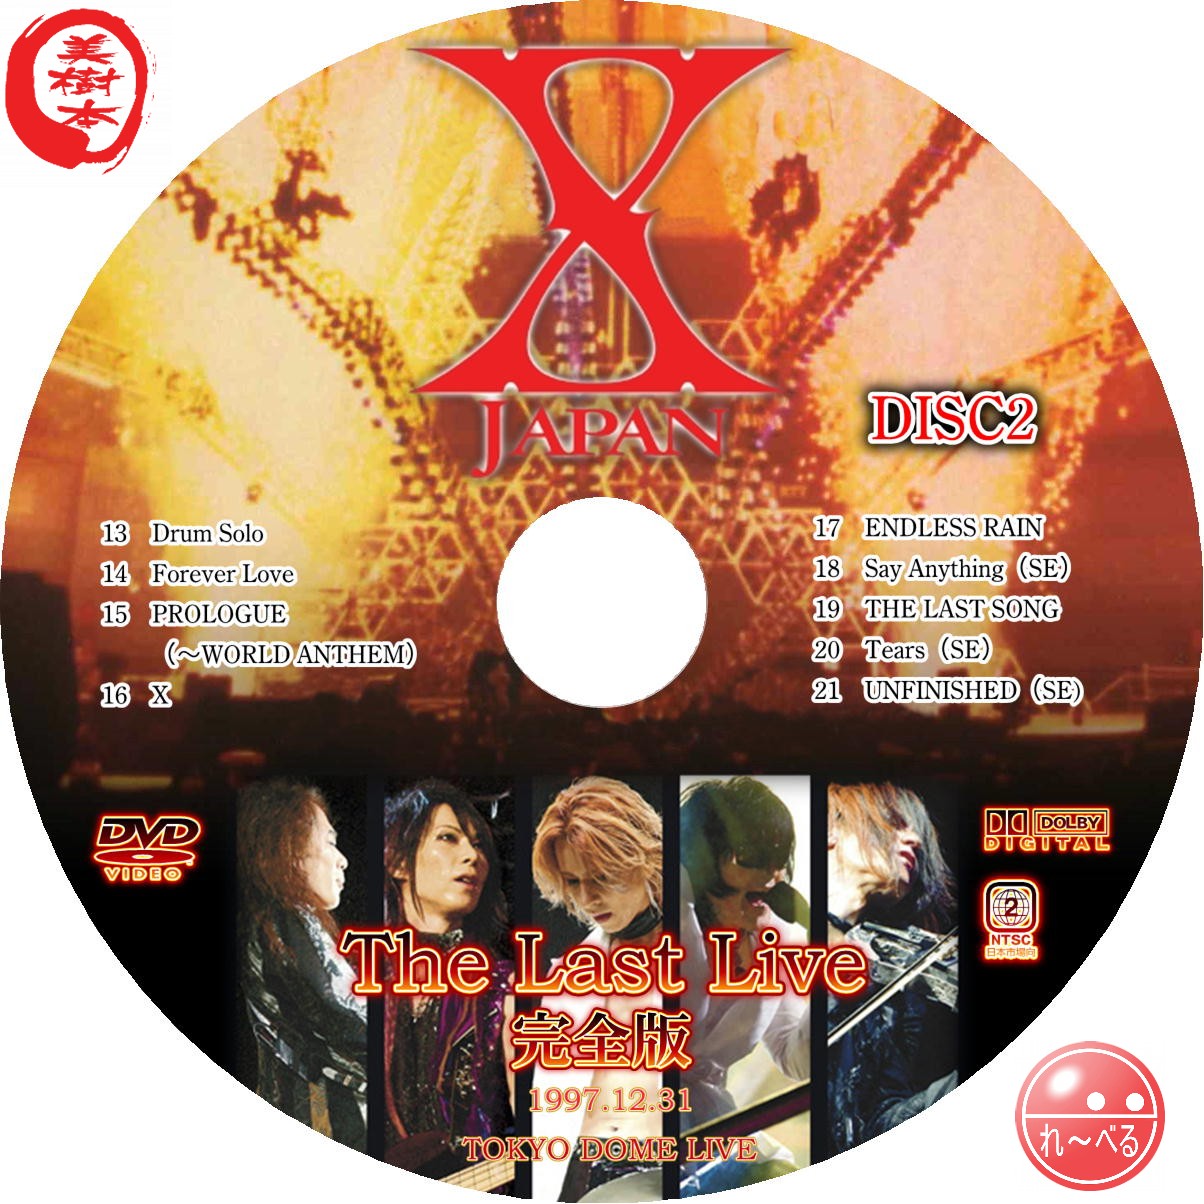 THE LAST LIVE 完全版 DVD X JAPAN ディスク良好 | www